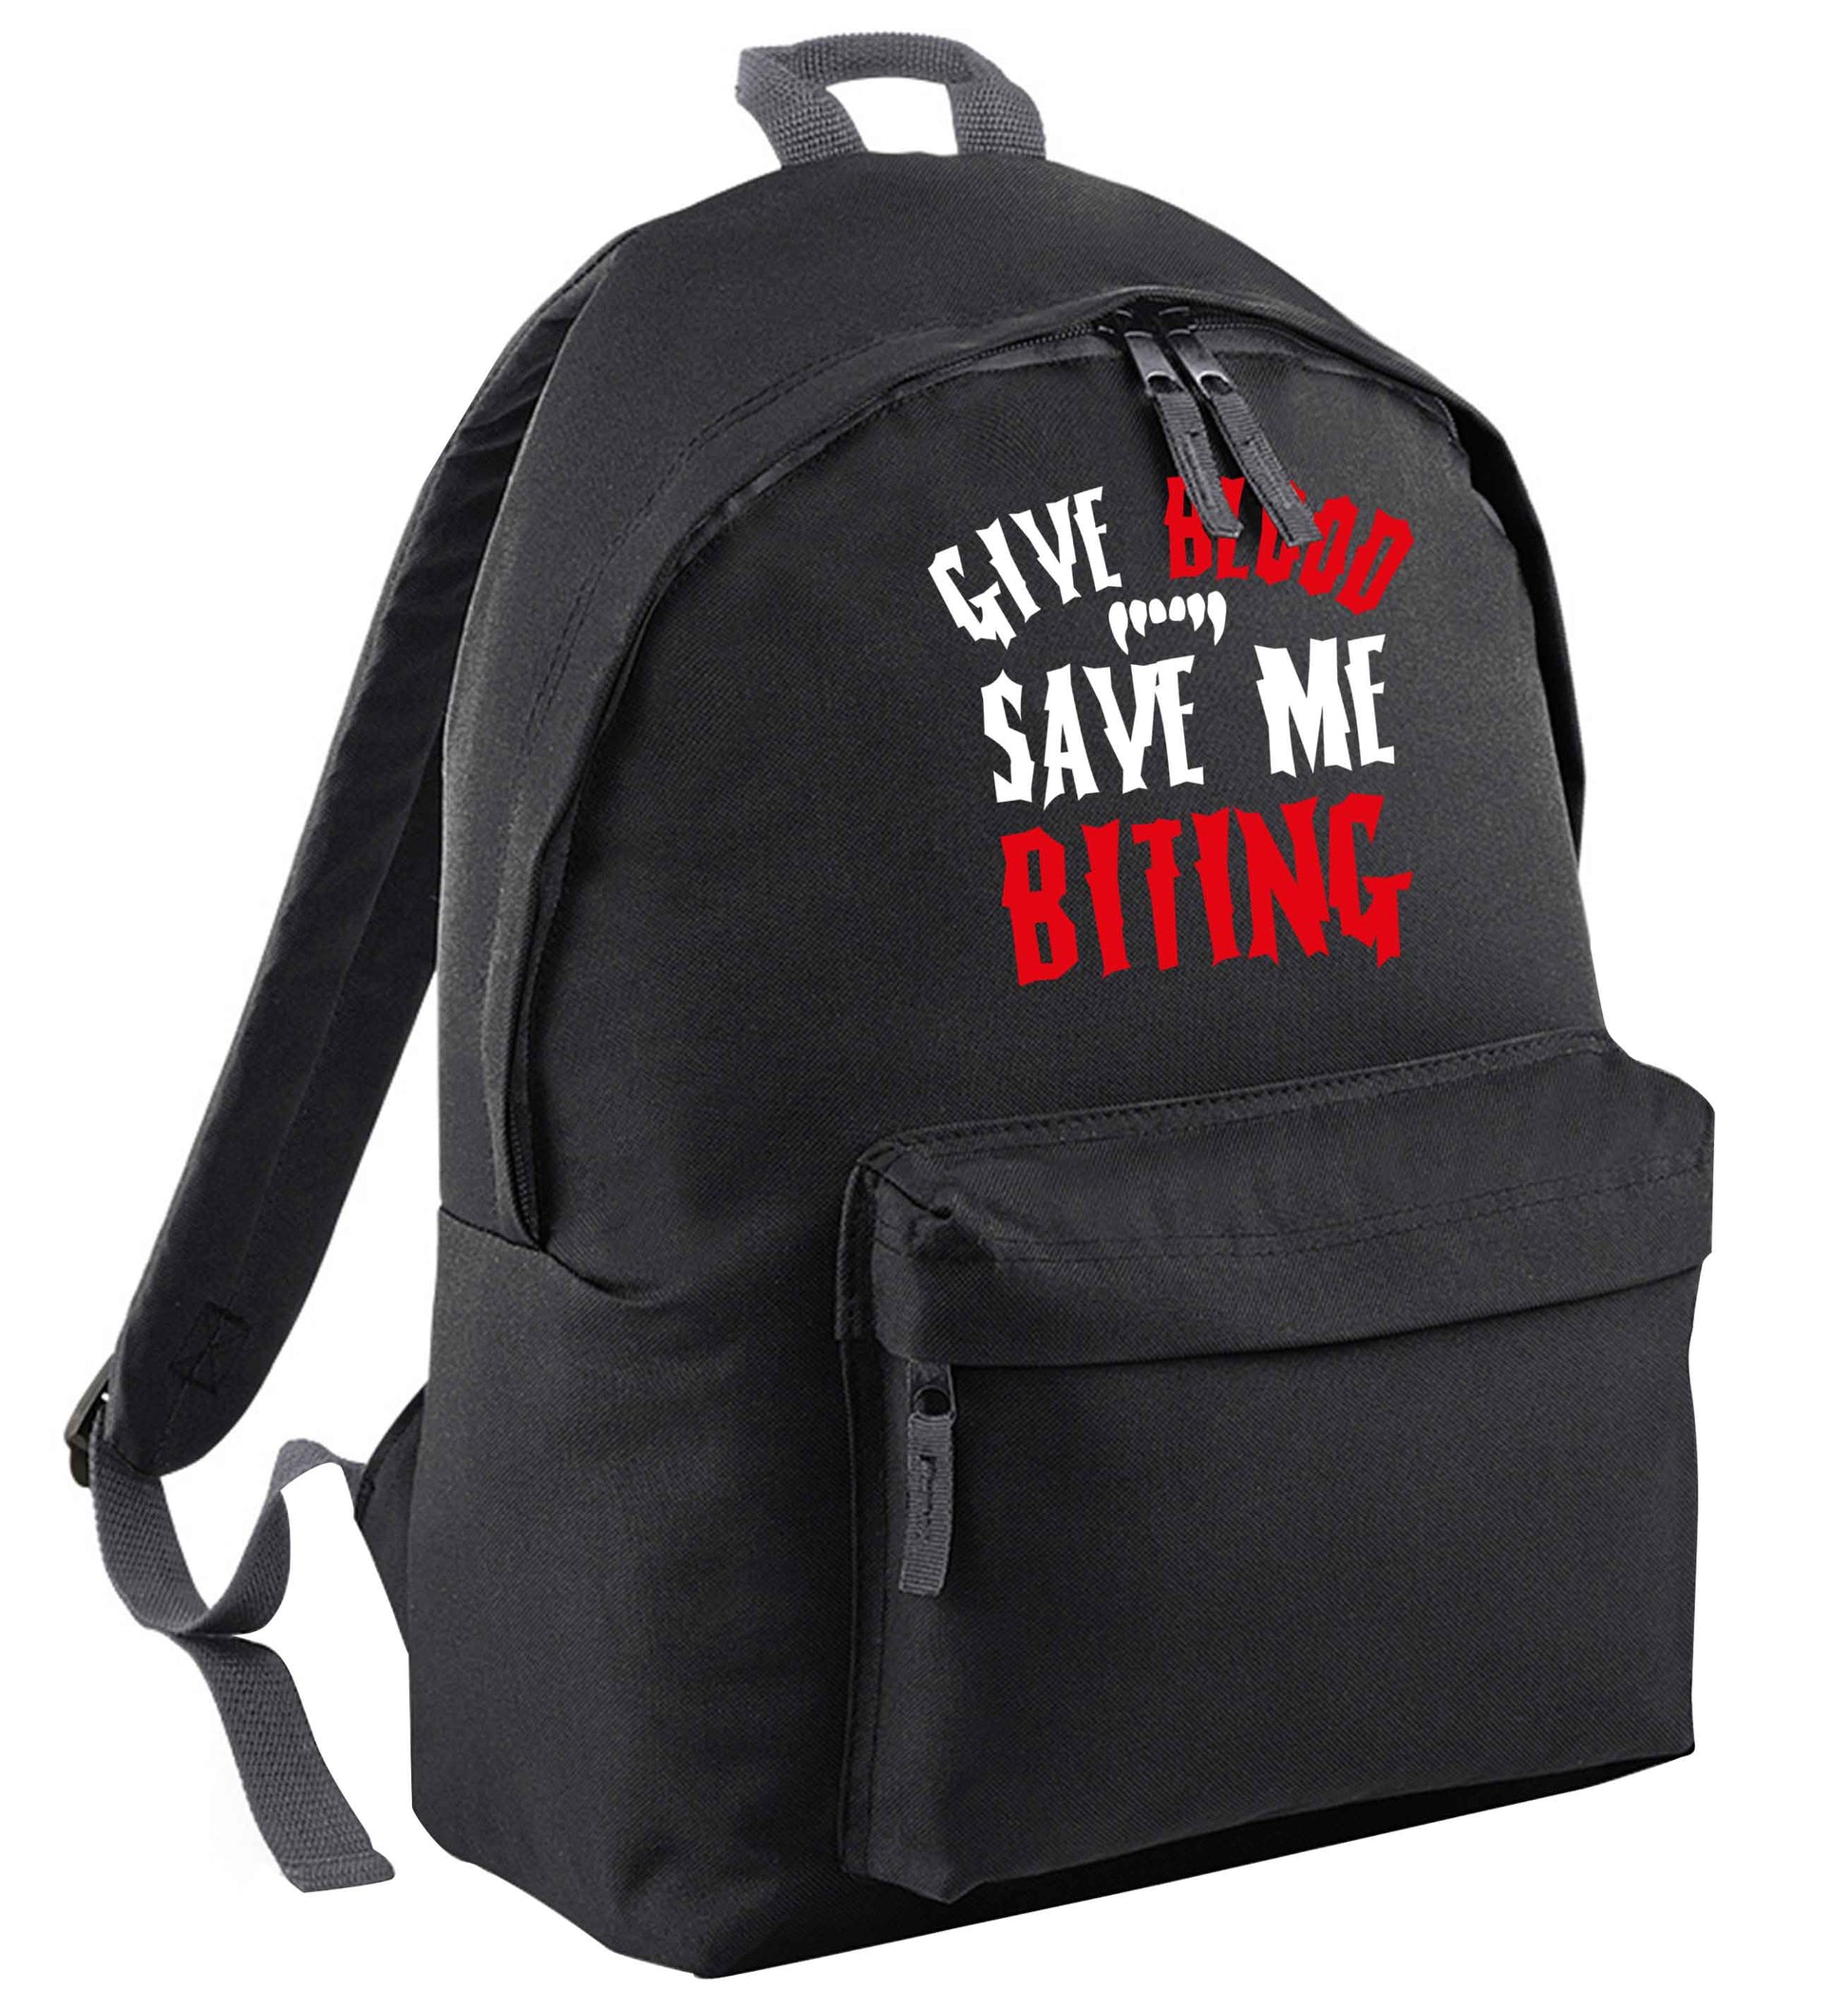 Give blood save me biting black adults backpack